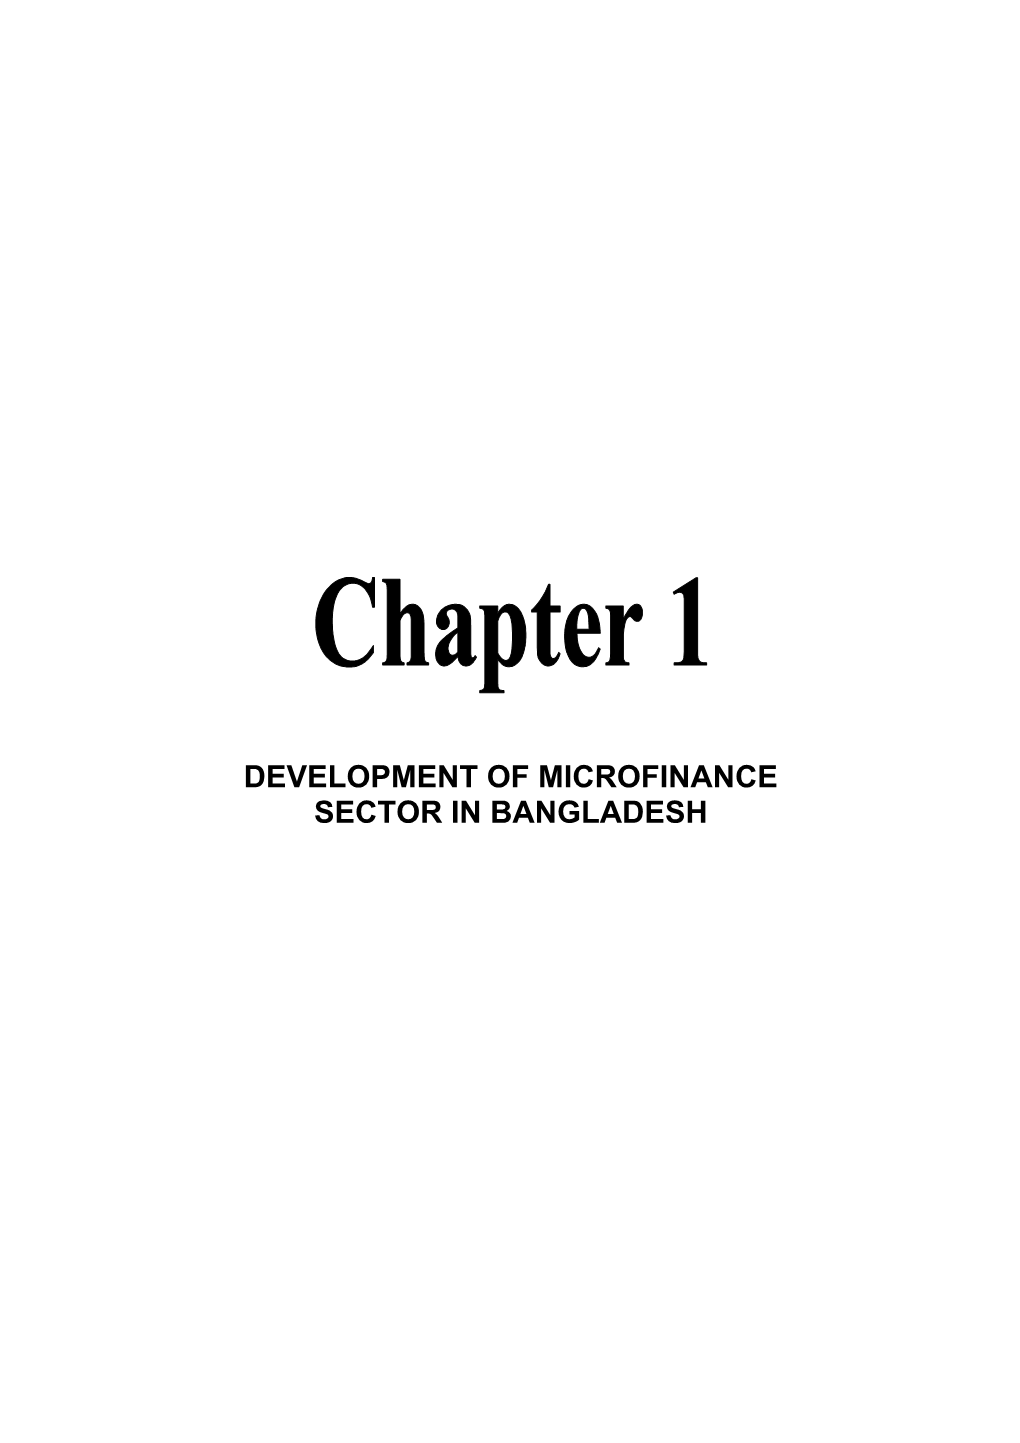 Development of Microfinance Sector in Bangladesh